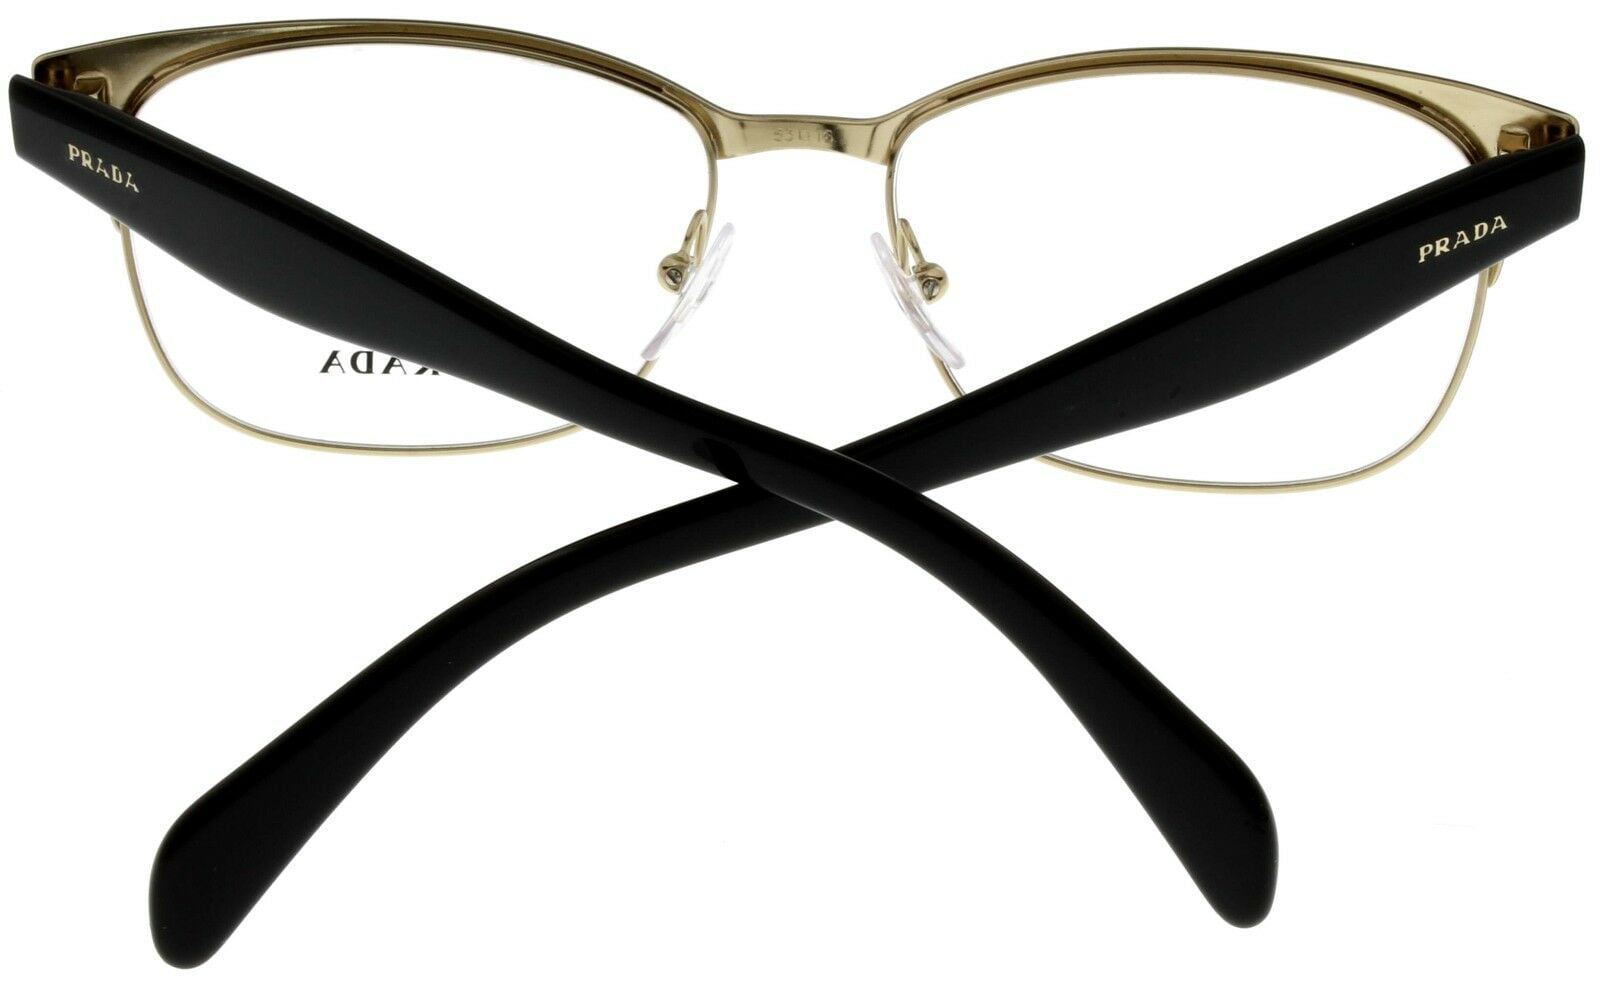 Prada PR65RV - 2821O1 Eyeglasses Ivory/Pale Gold 55mm at  Women's  Clothing store